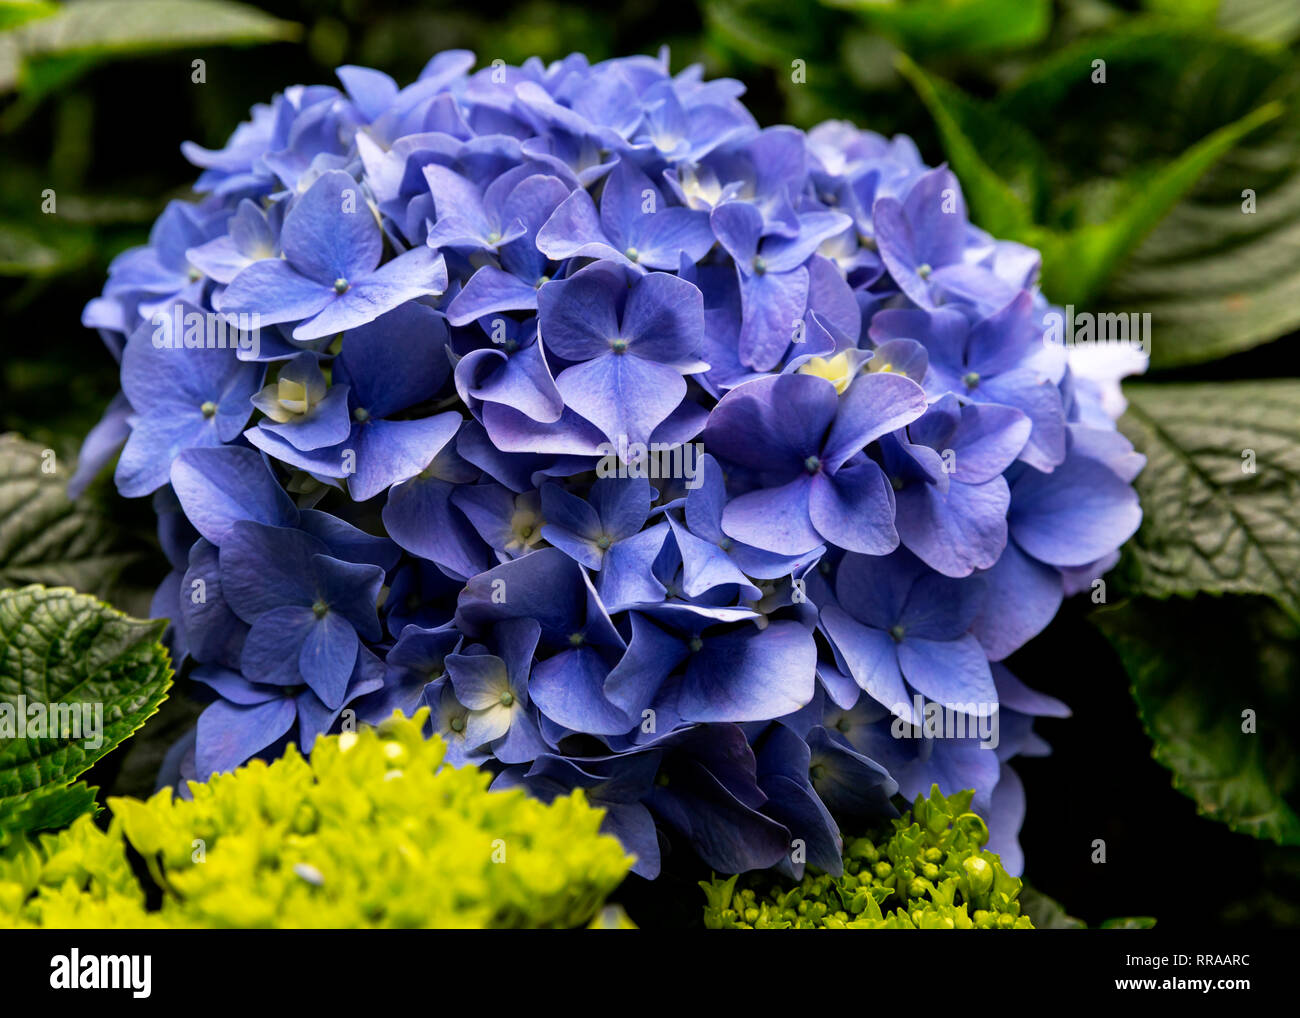 Blue Hydrangea flower cluster. Stock Photo